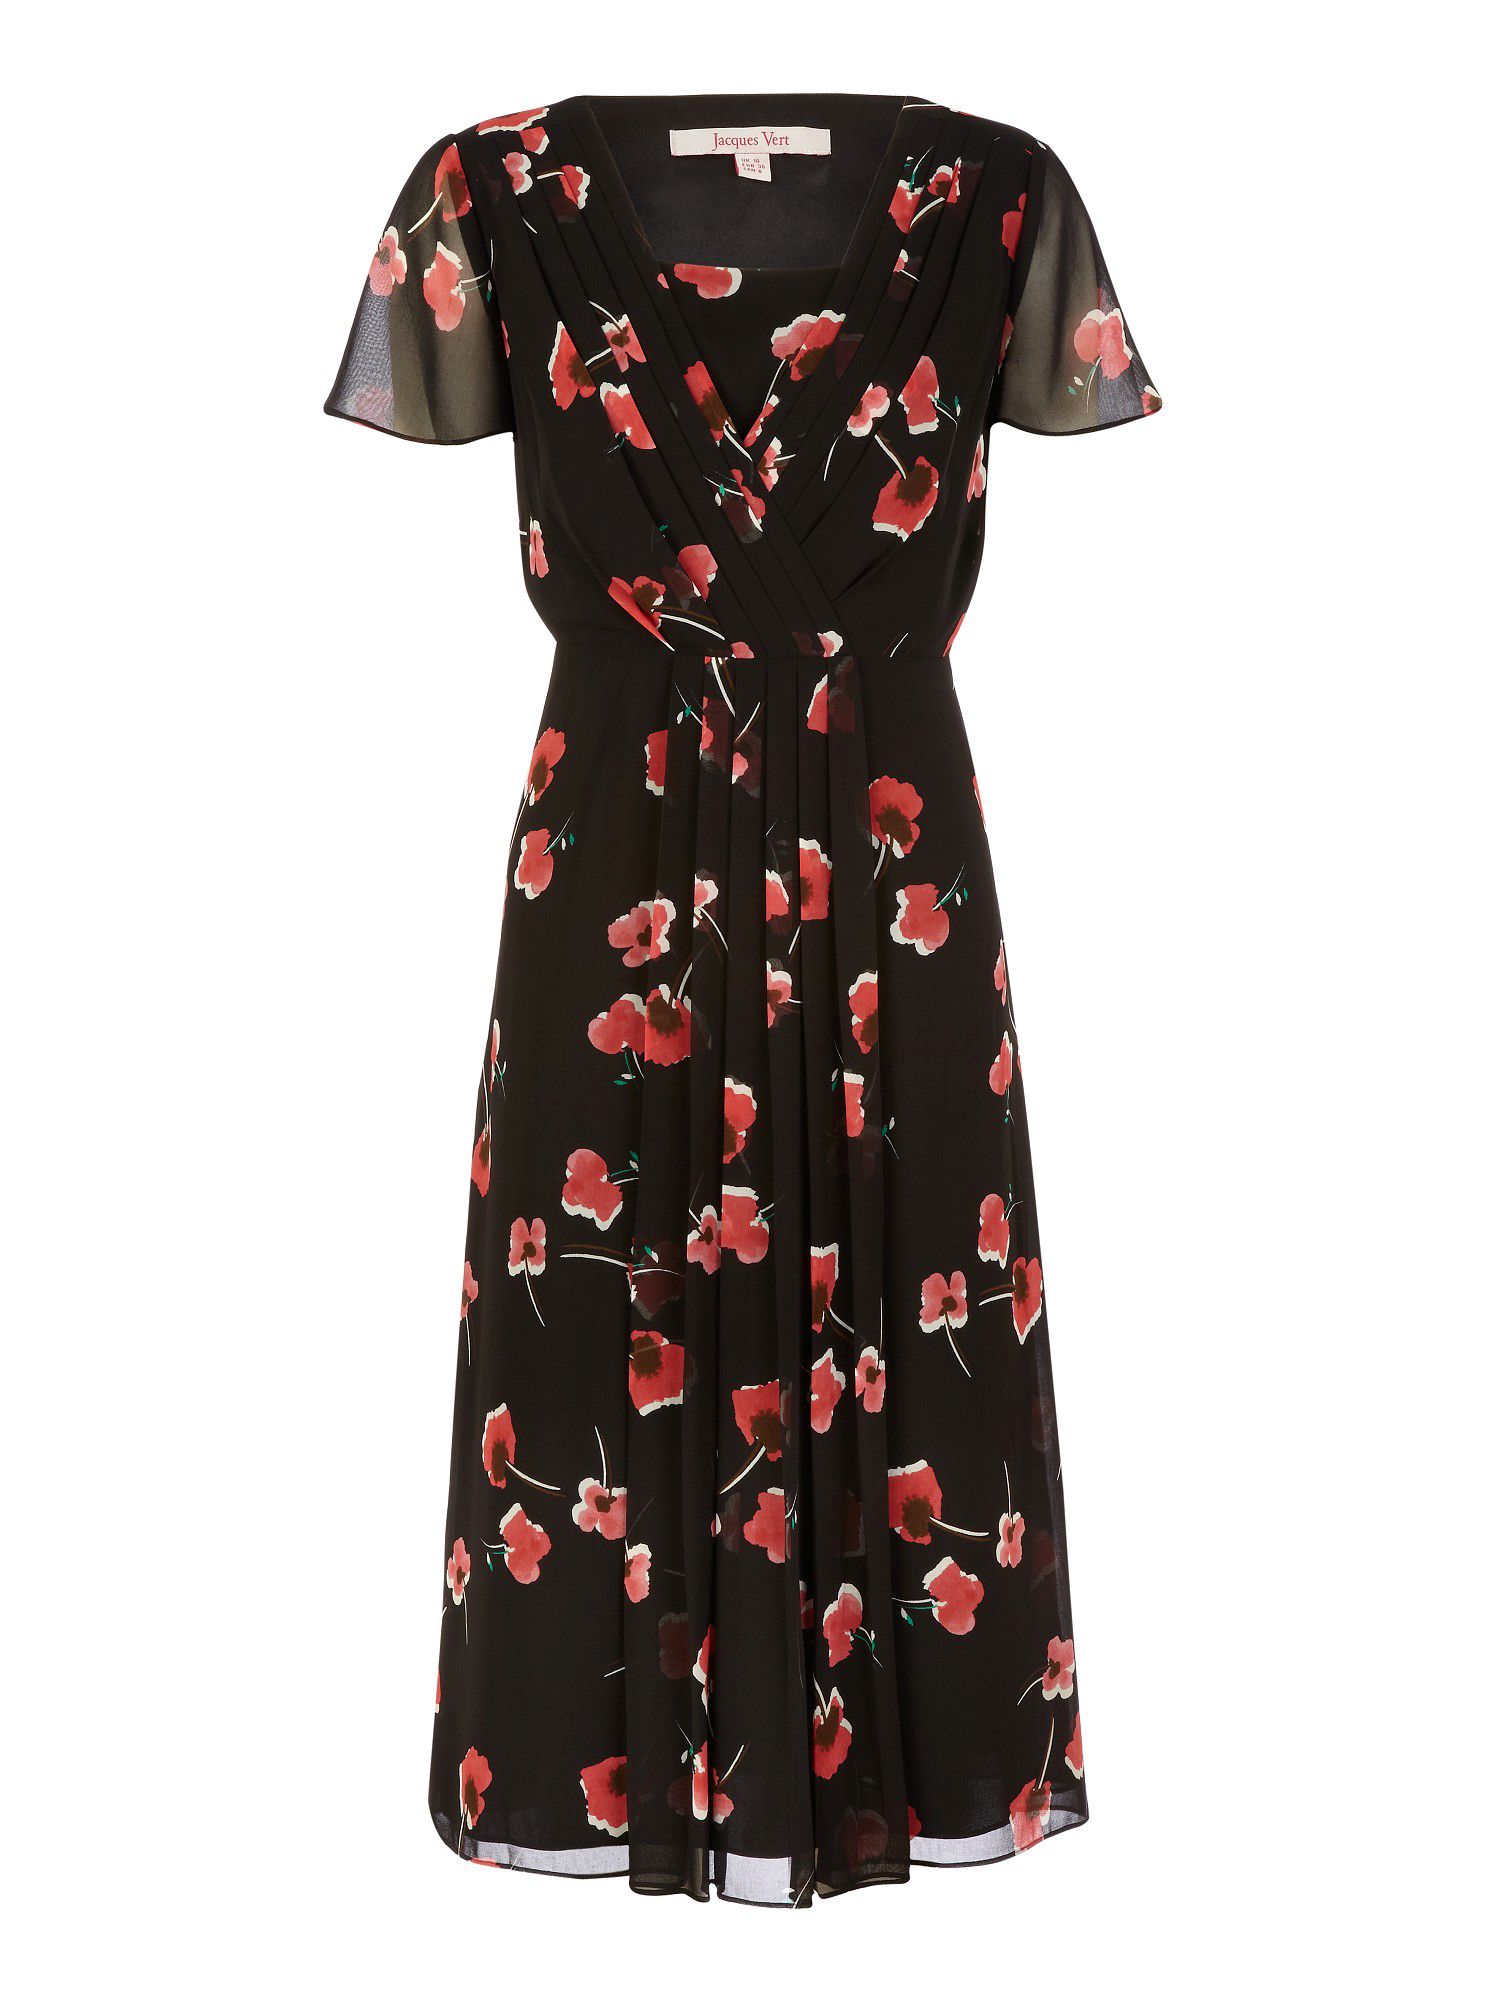 Jacques vert Poppy Print Dress in Brown (black) | Lyst